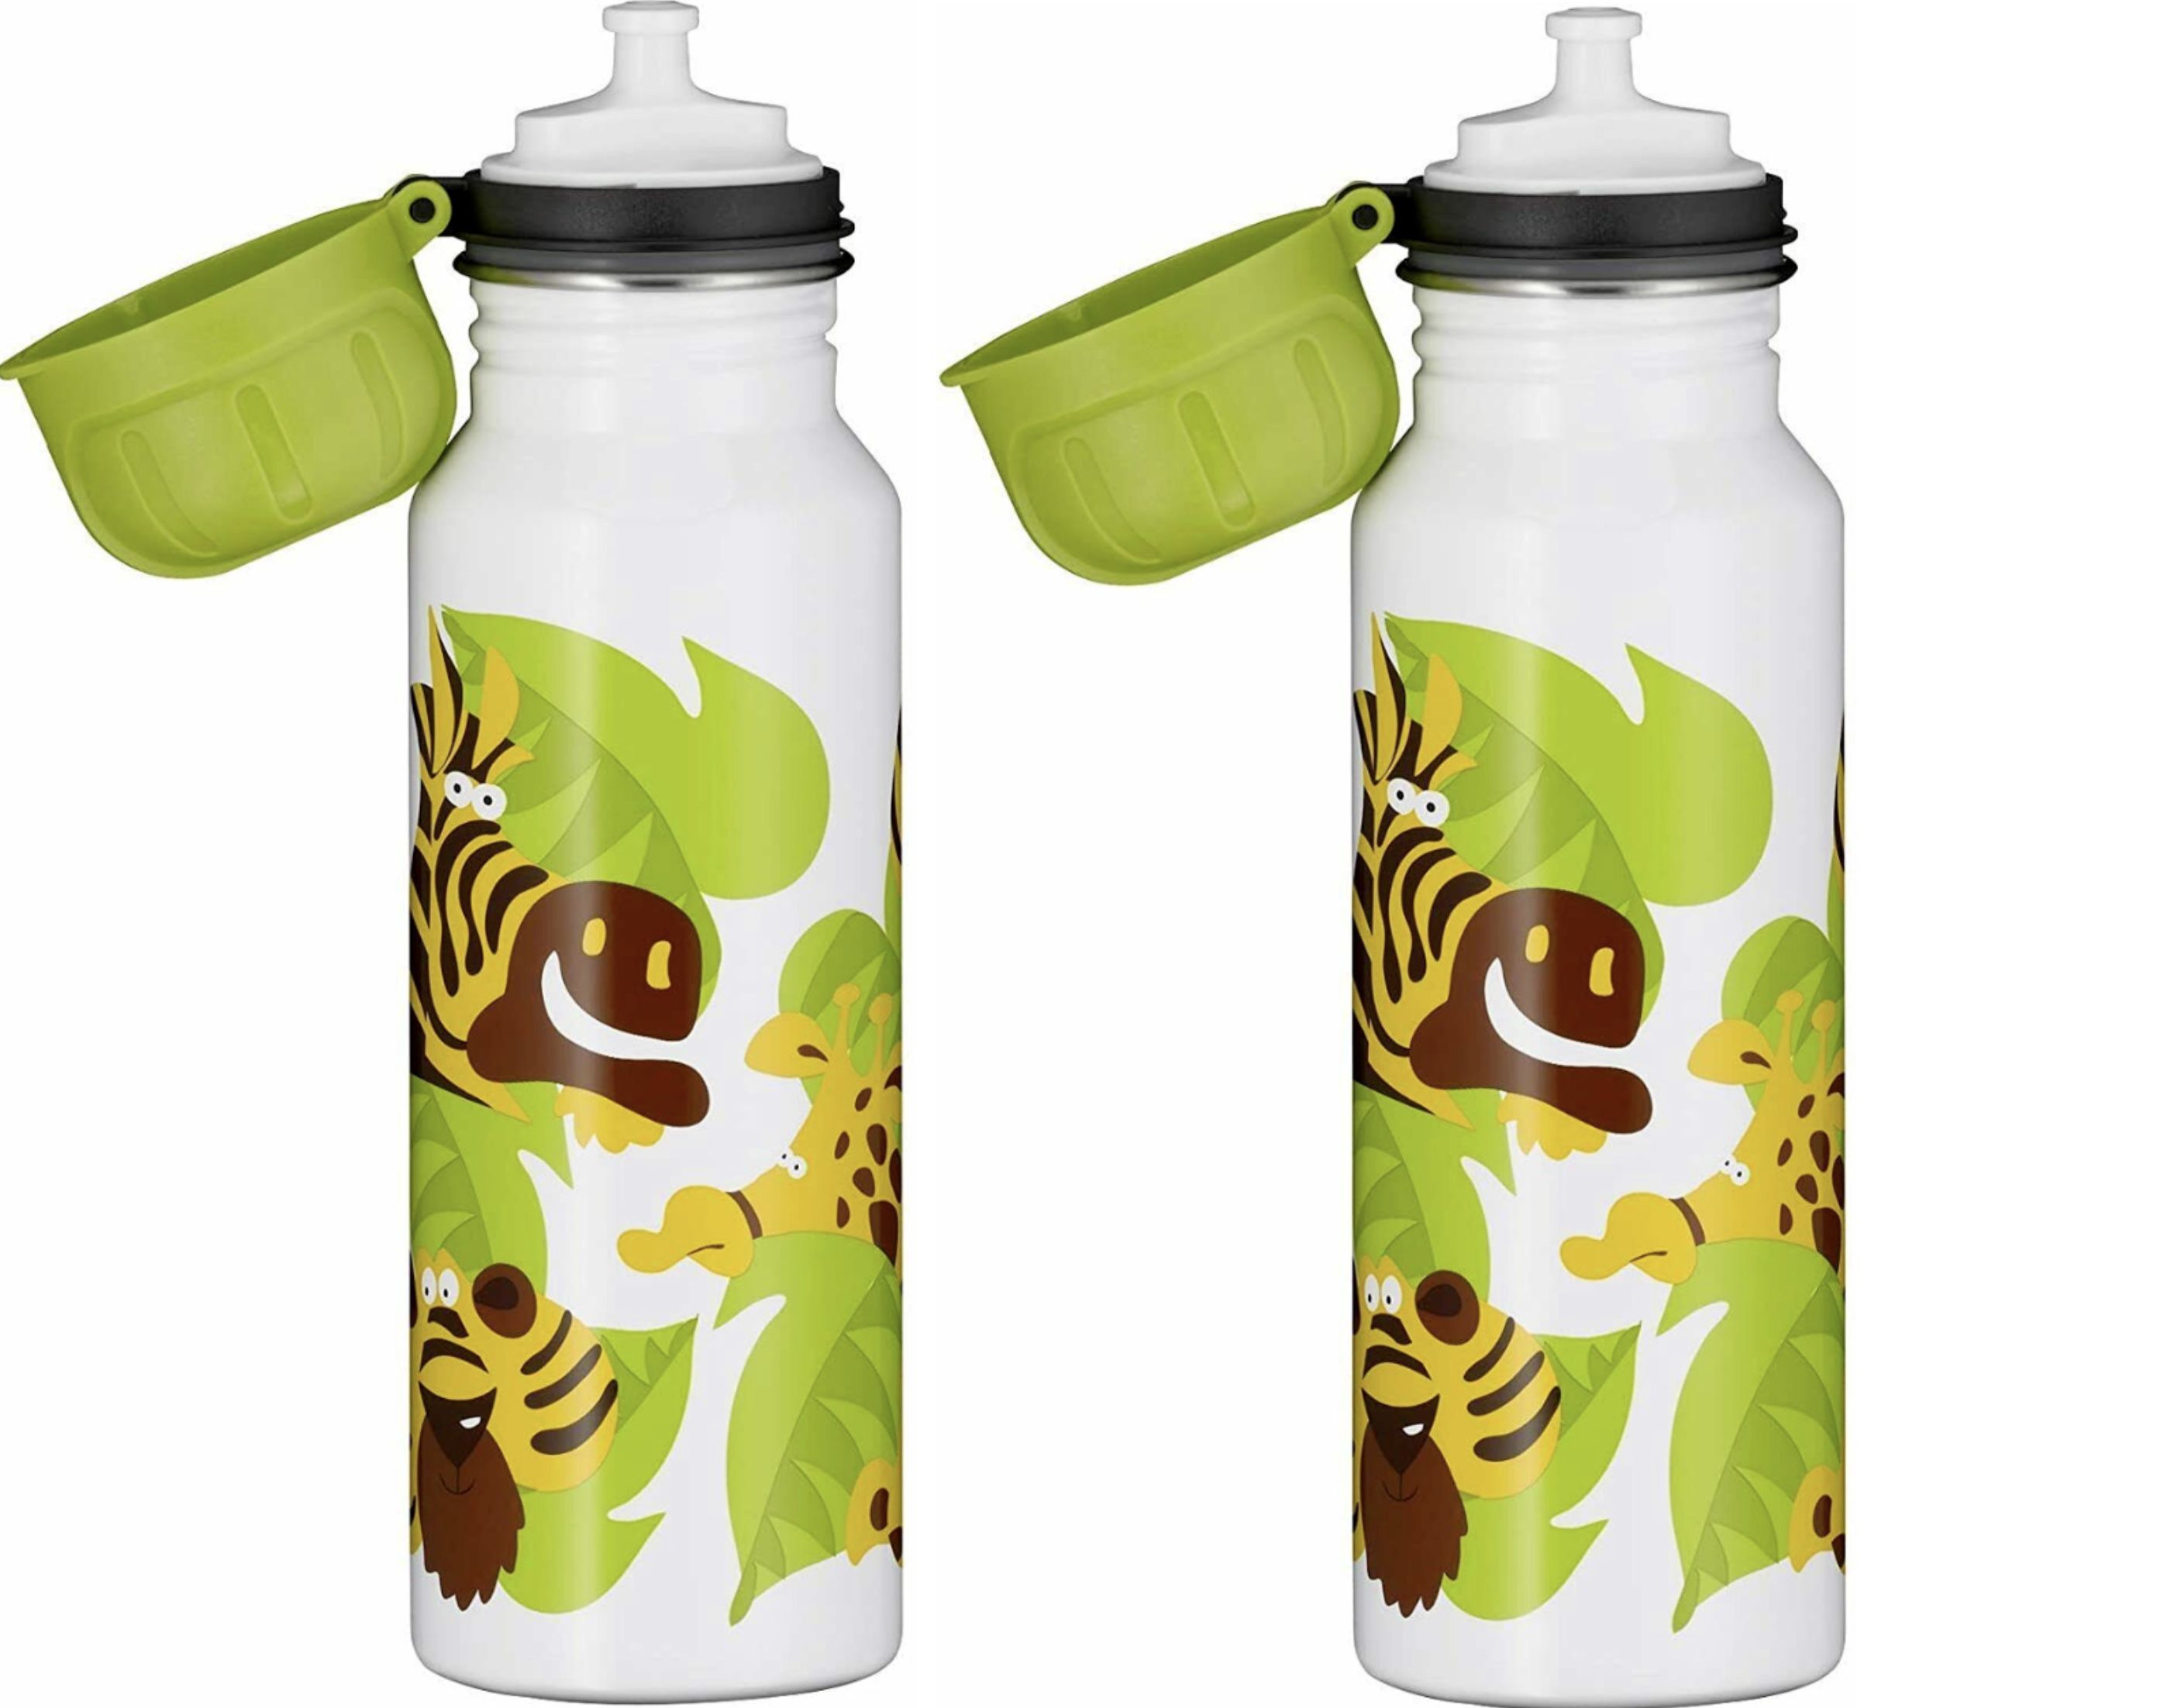 2x alfi Edelstahl Kinder-Trinkflasche mit Jungle-Design (je 600ml) für 9,99€ (statt 18€)